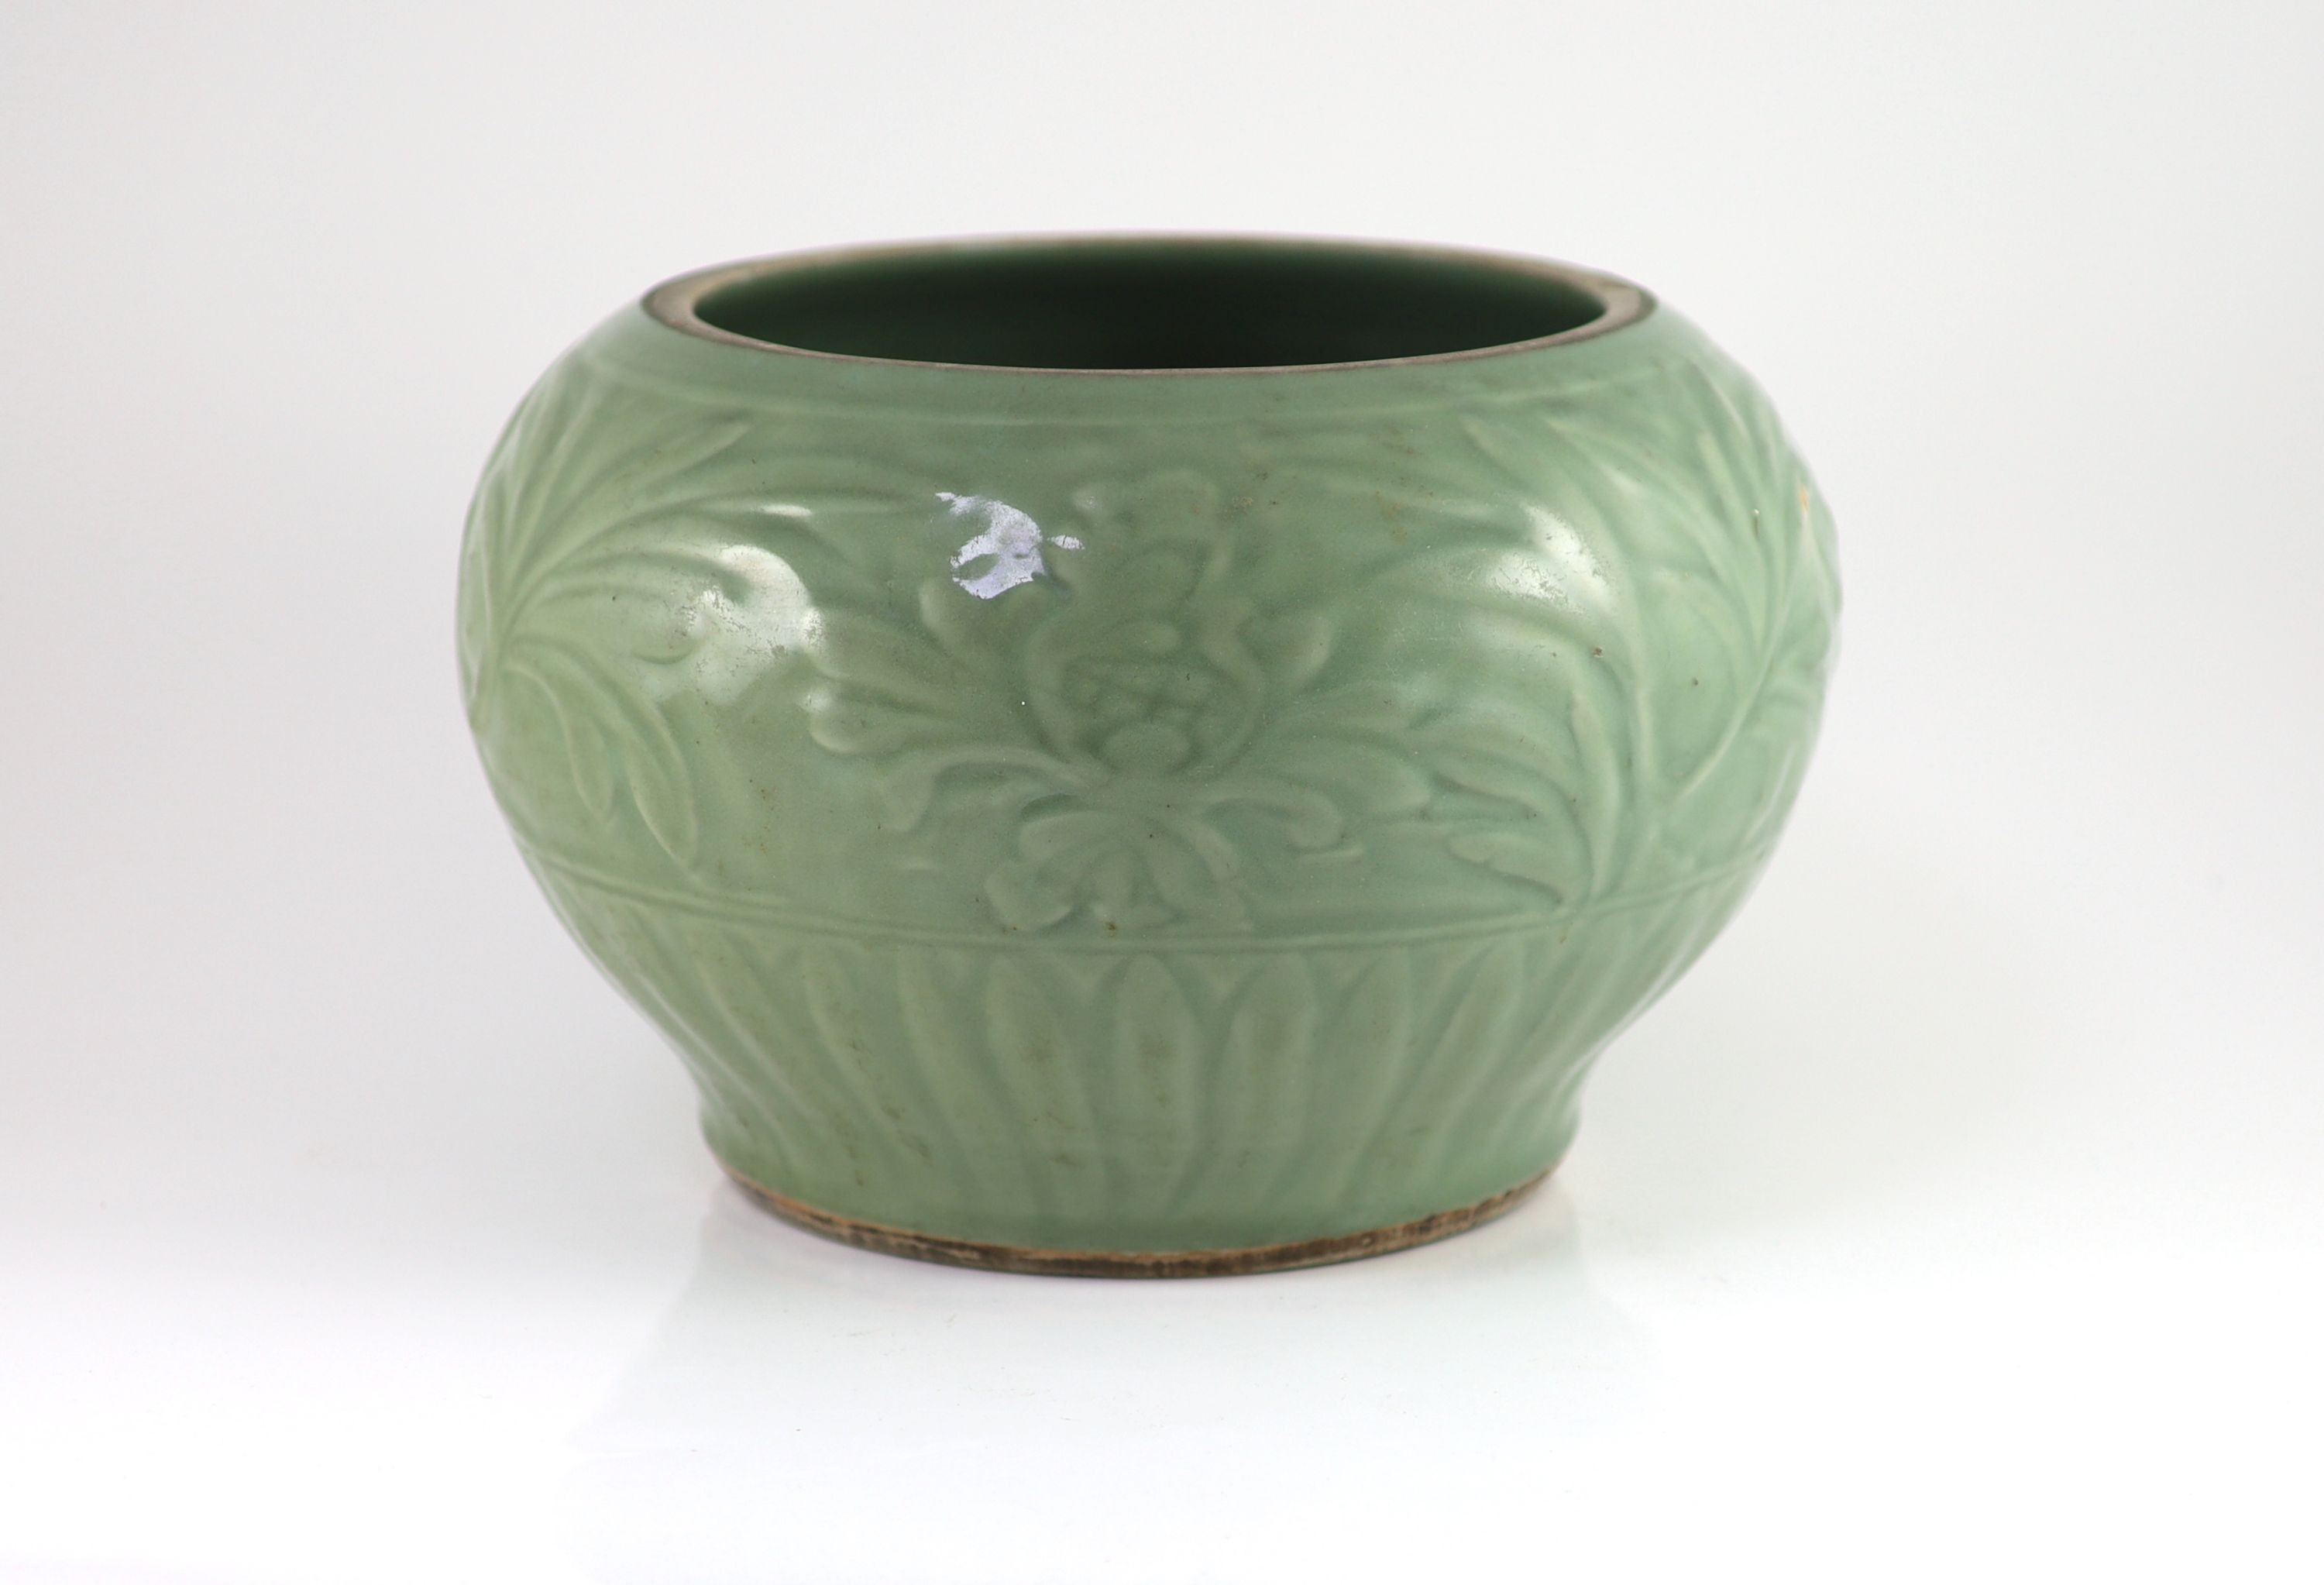 A large Chinese Longquan celadon jar, Guan, 14th century, 30.5 cm diameter, neck ground off